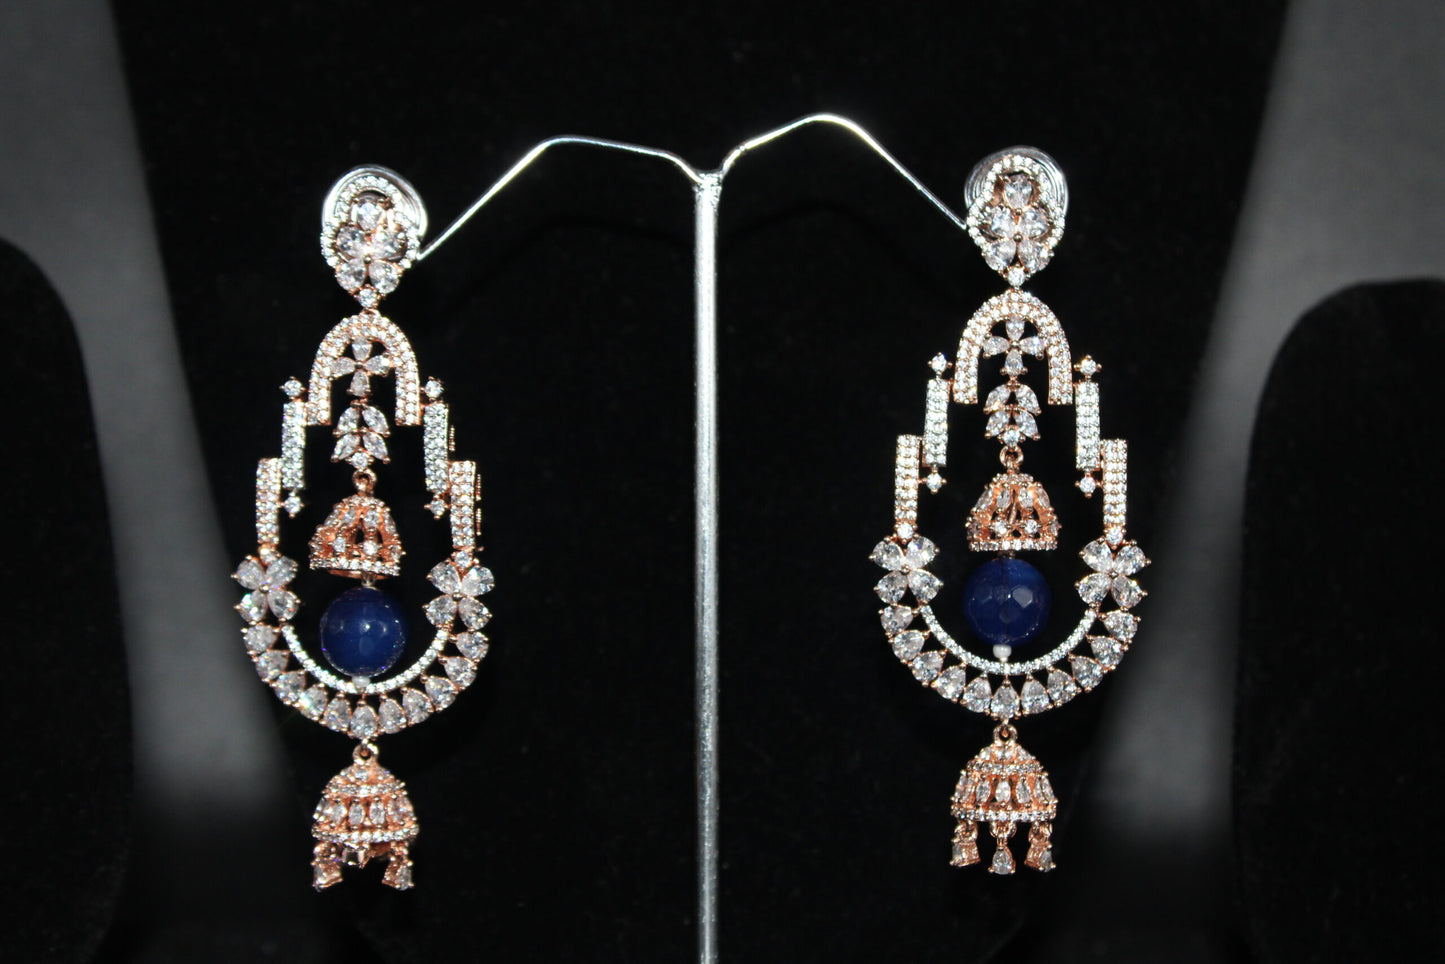 Elegant designed earrings filled with american diamonds